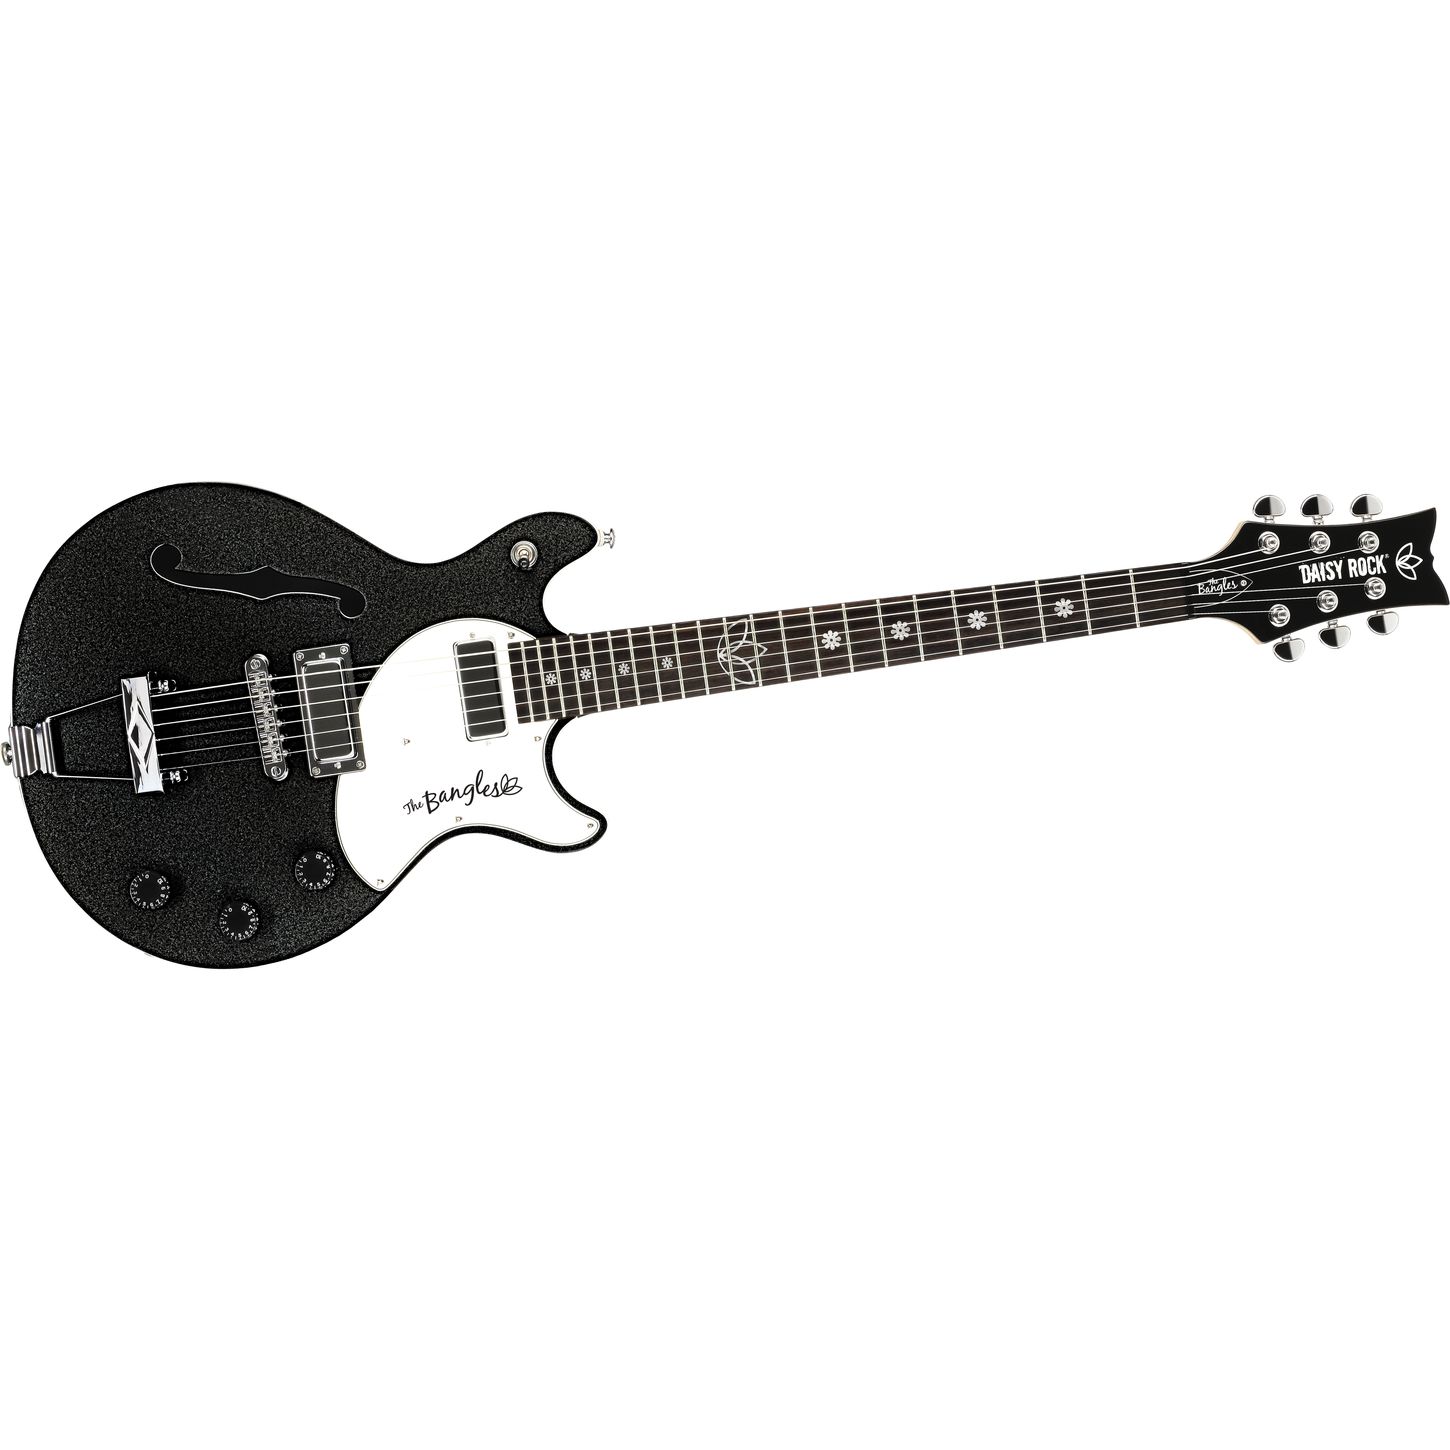 Black And White Electric Guitar Clip Art Electric Guitar Metallic